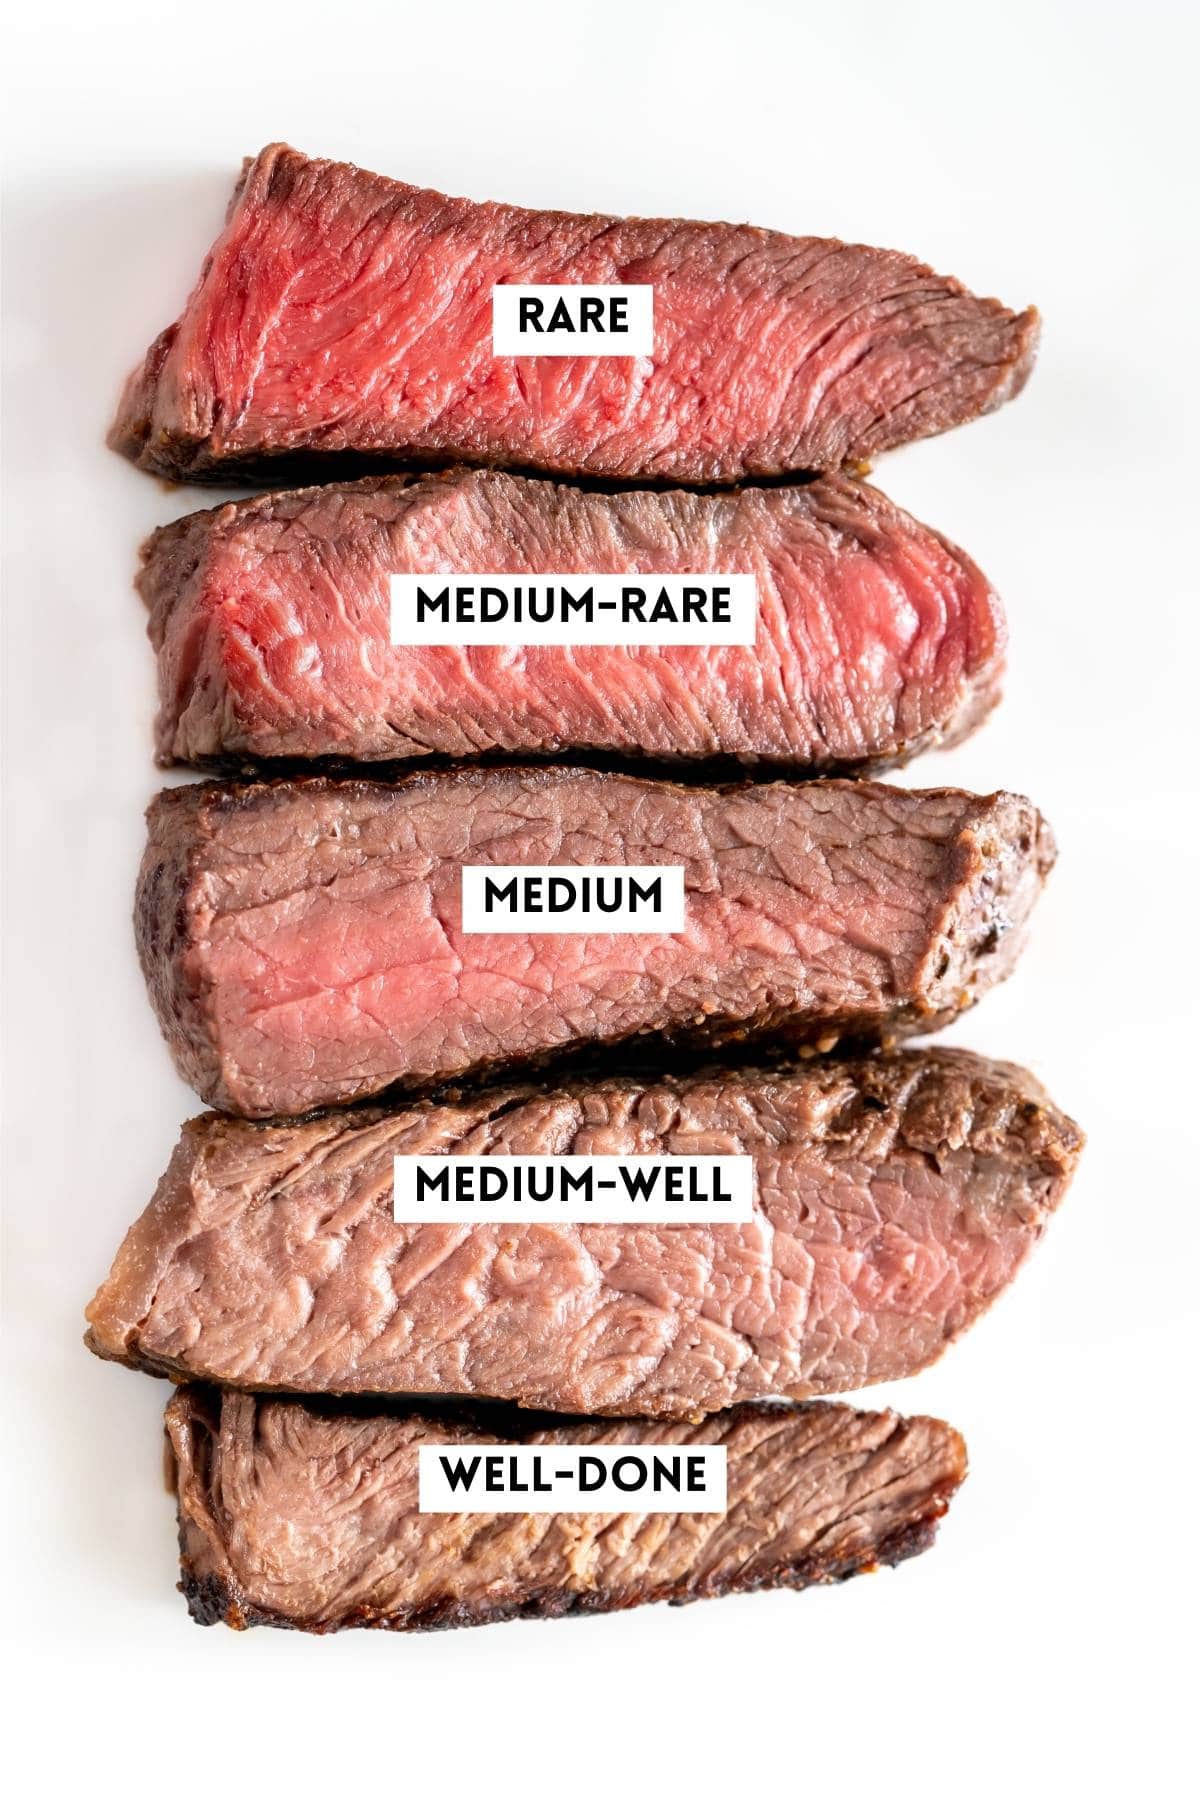 Doneness chart for steak.